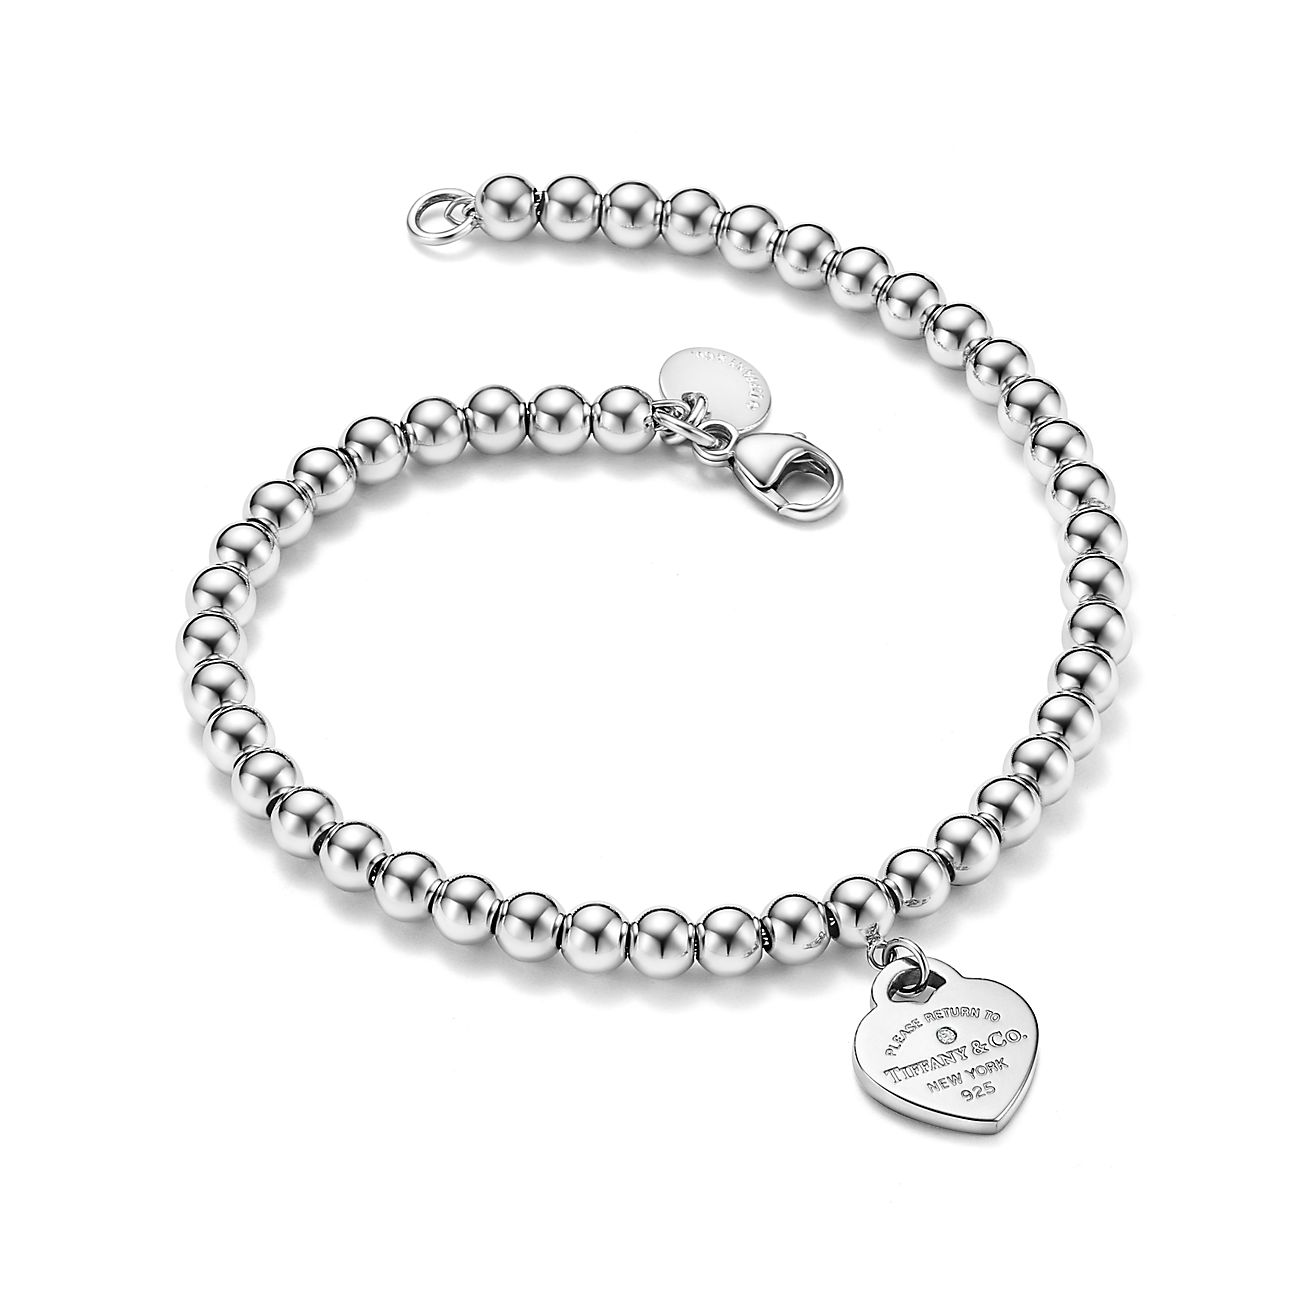 Details more than 85 tiffany bead bracelet best - ceg.edu.vn